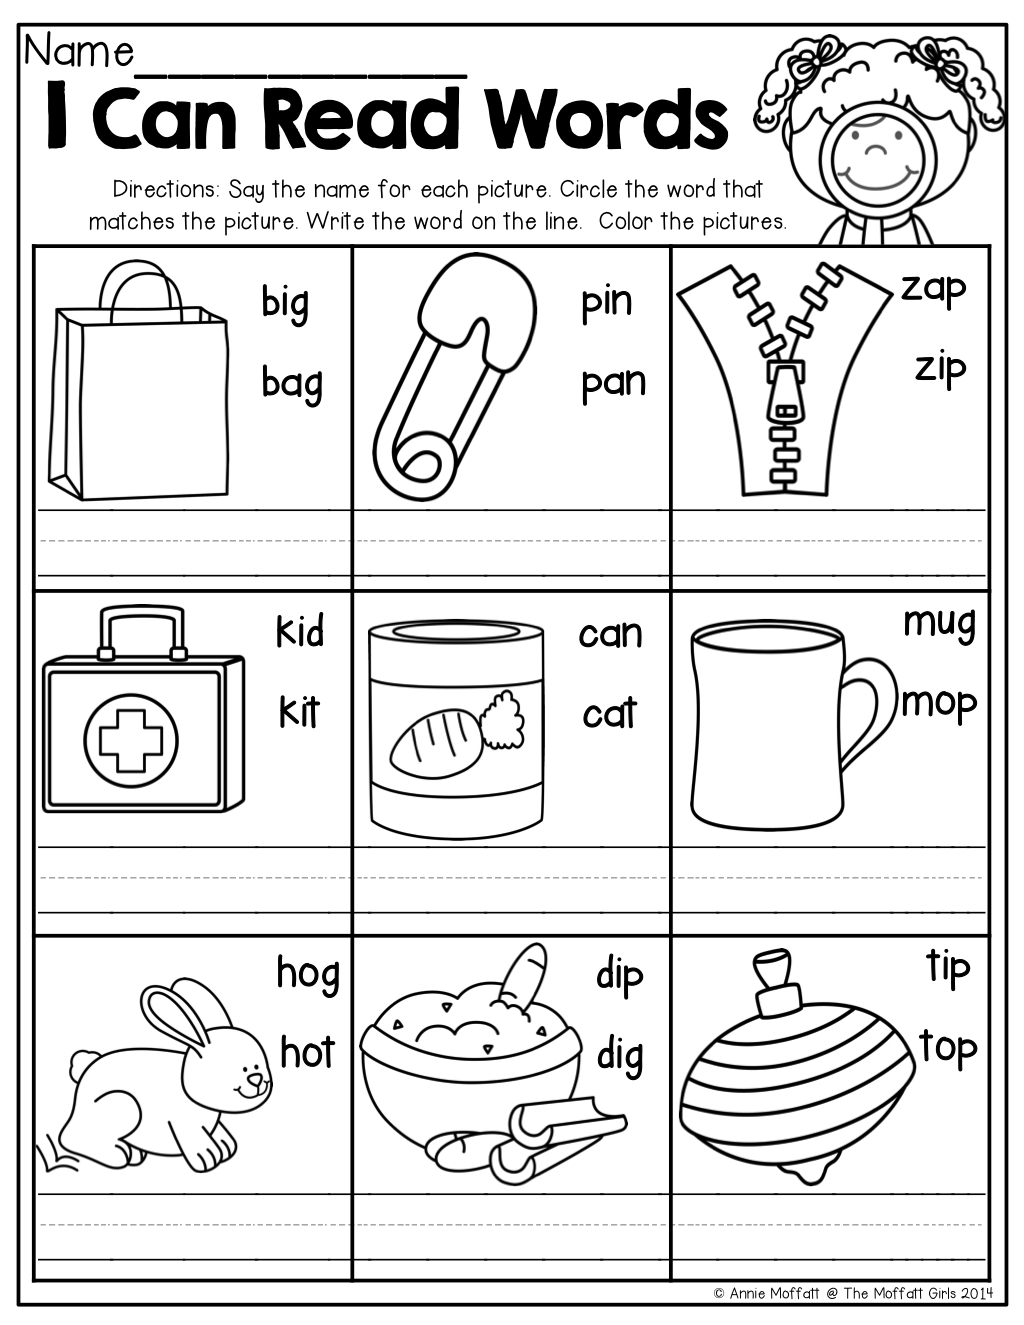 Cvc Worksheets For Kindergarten For Free Download - Math Worksheet | Cvc Worksheet Printable